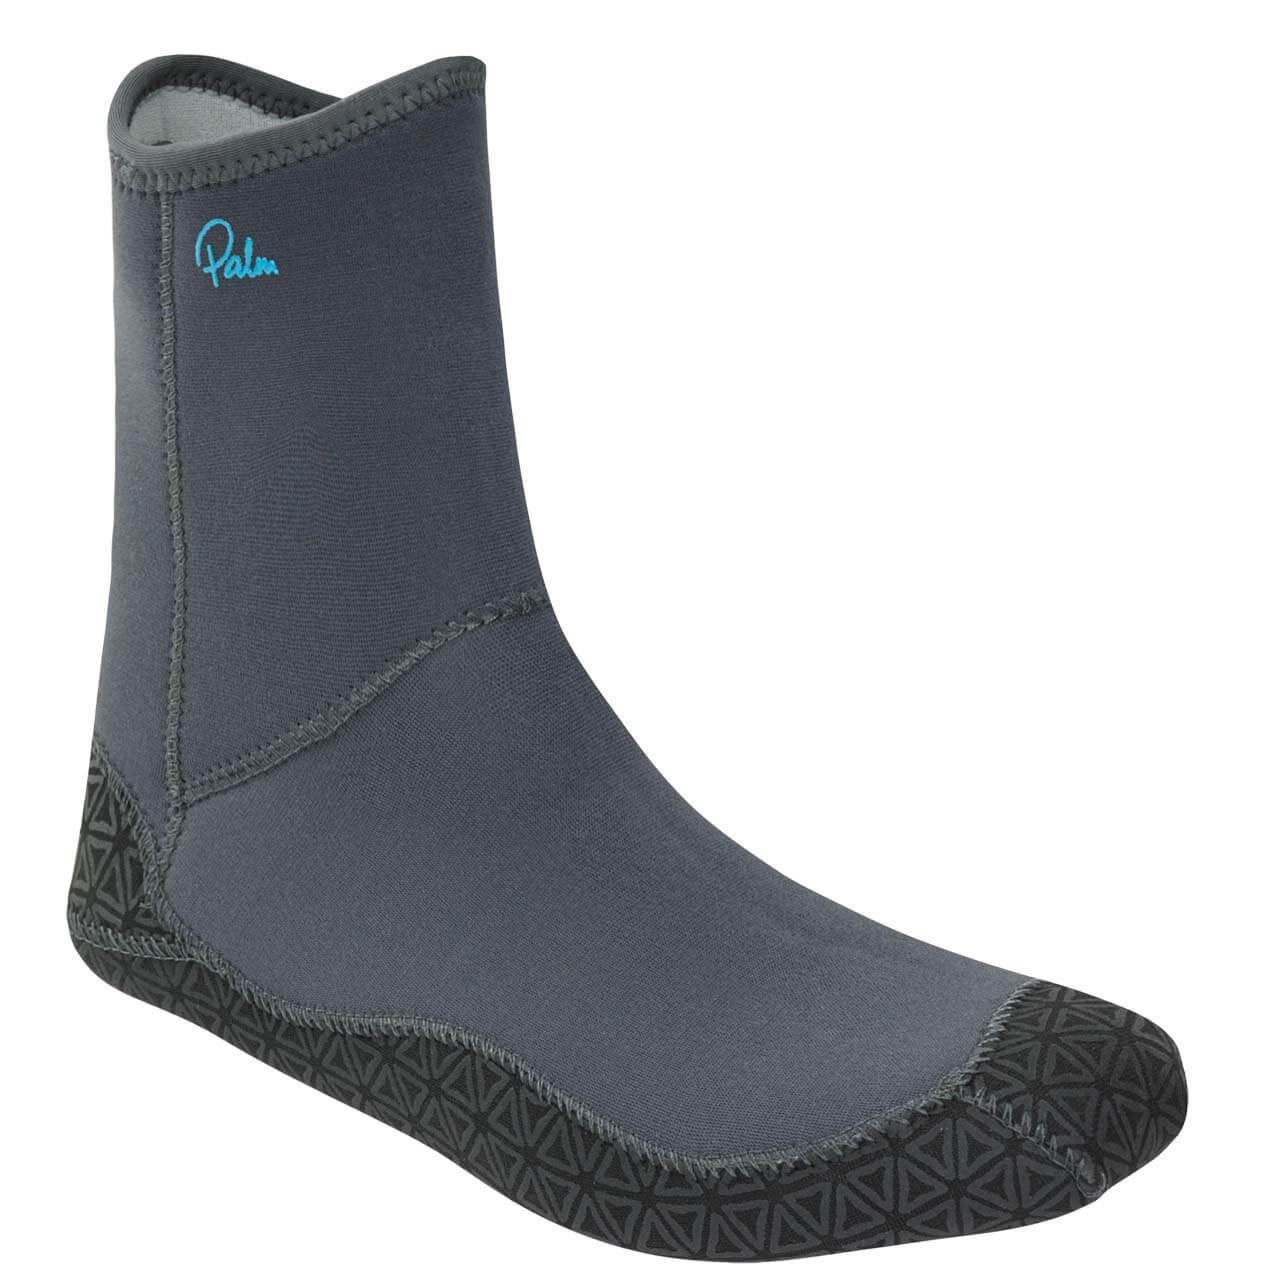 Palm Kick Socks - Jet Grey, XL